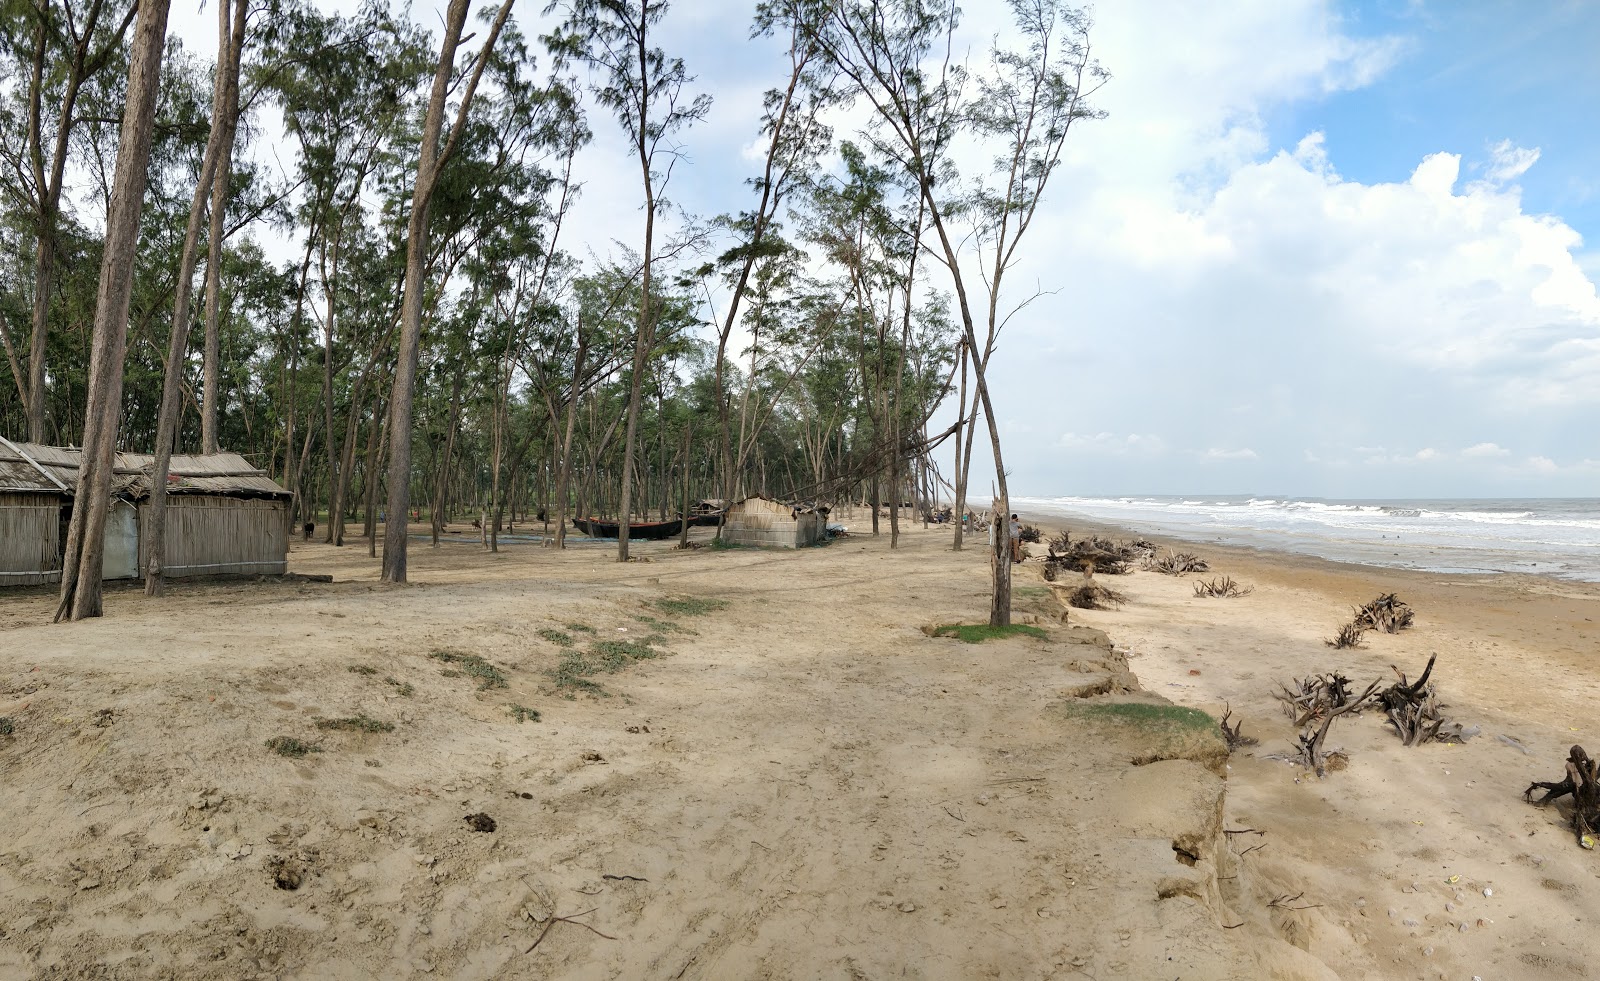 Foto de Tajpur Beach - lugar popular entre os apreciadores de relaxamento